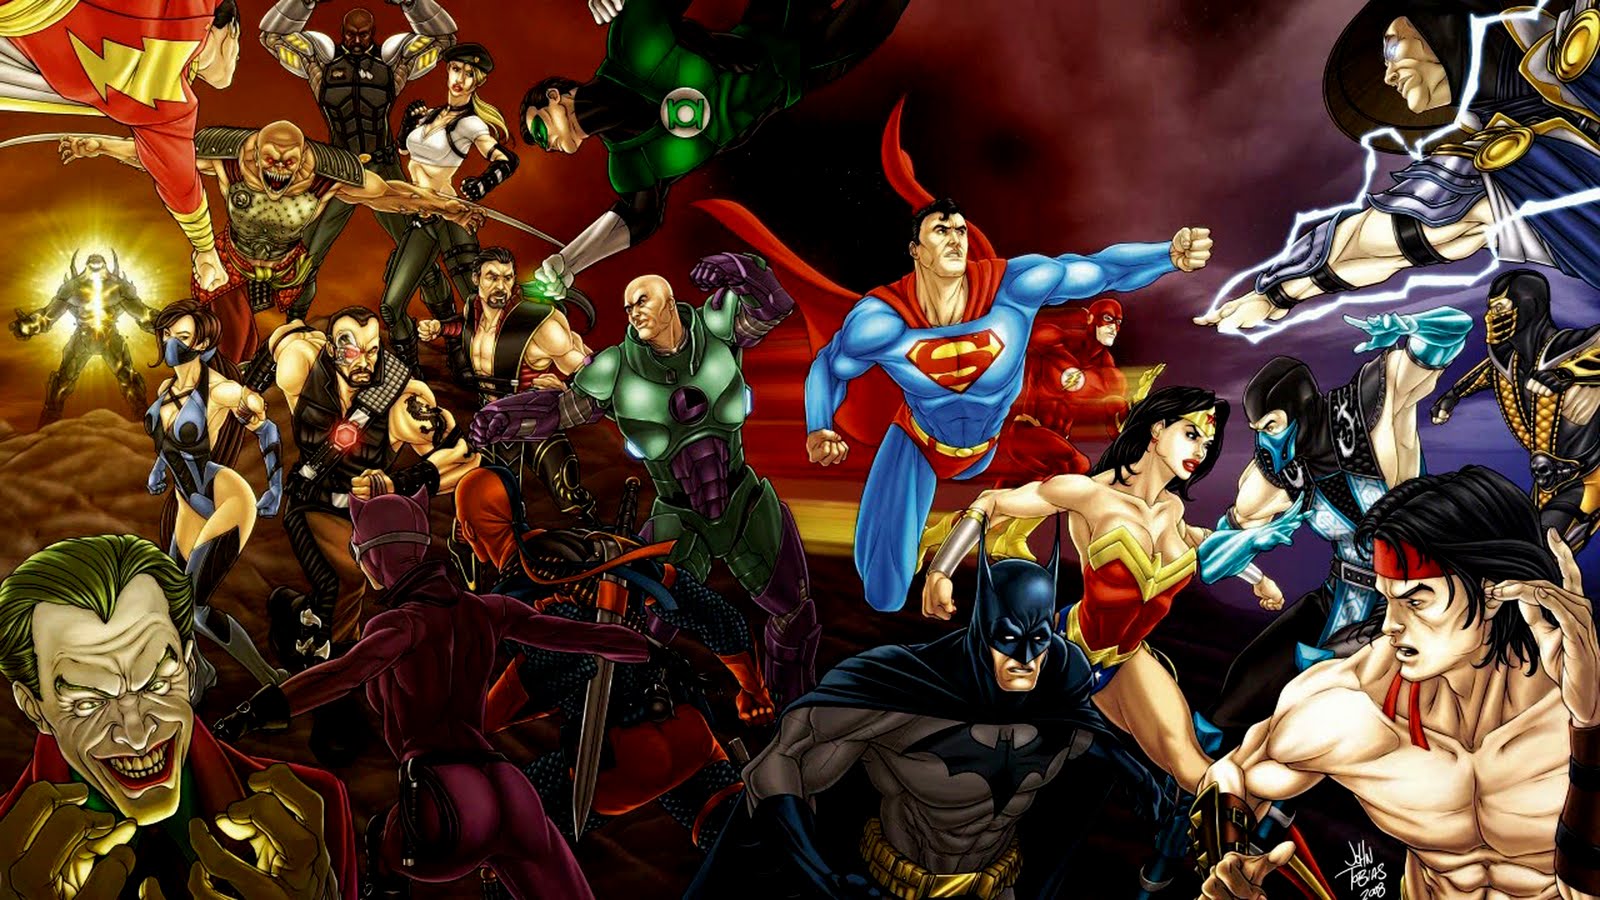 DC Comics Super Heroes HD Wallpaper wwwVvallpaperNetjpg 1600x900